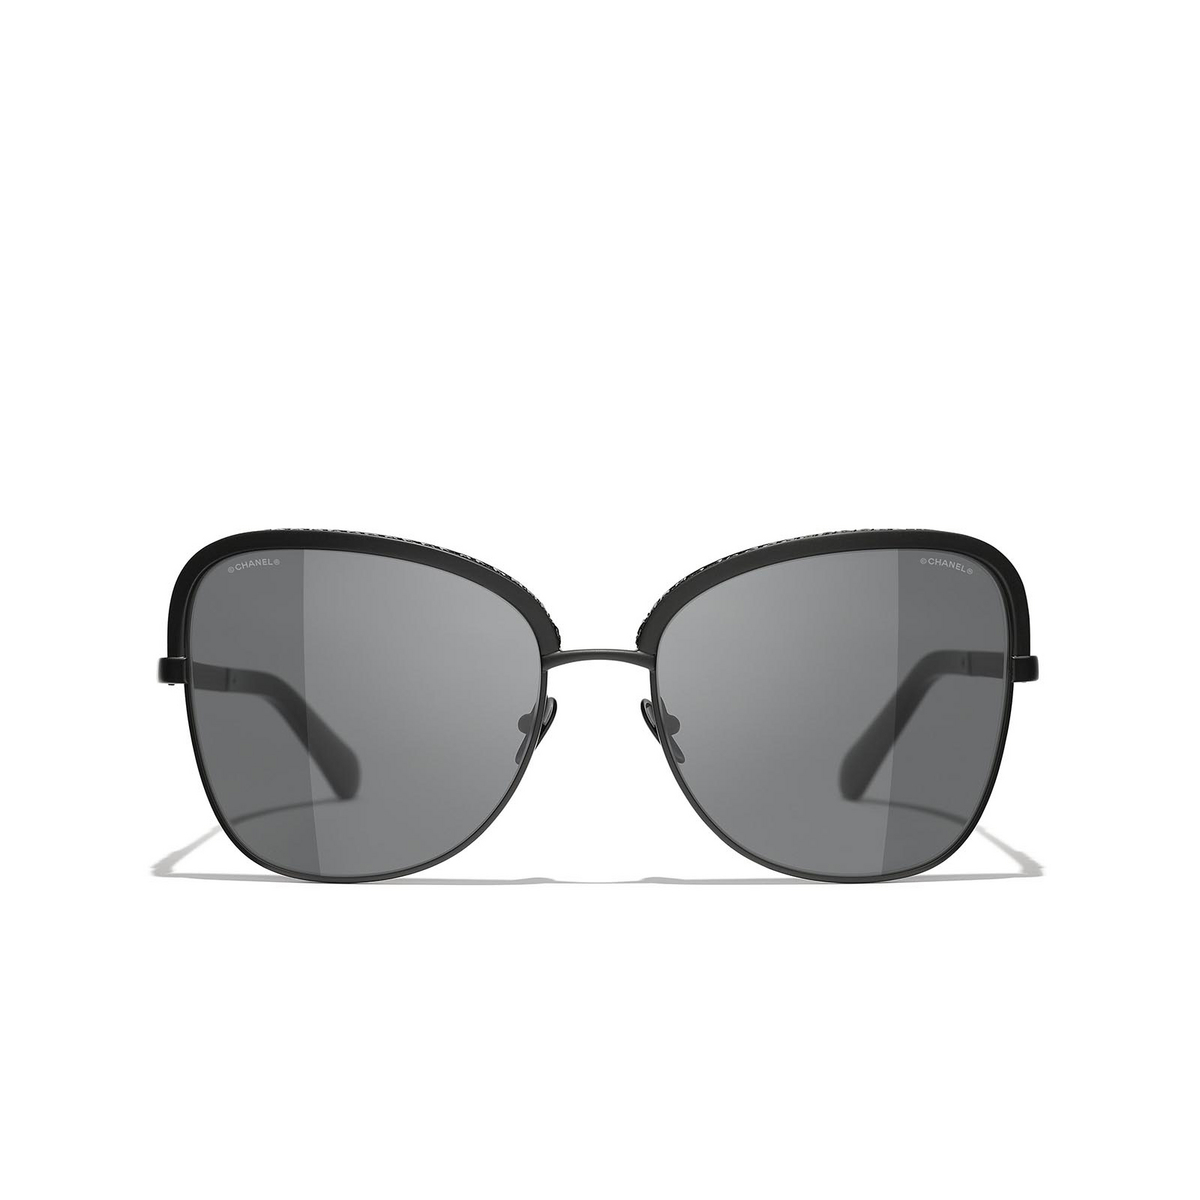 CHANEL square Sunglasses C101S4 Black - front view